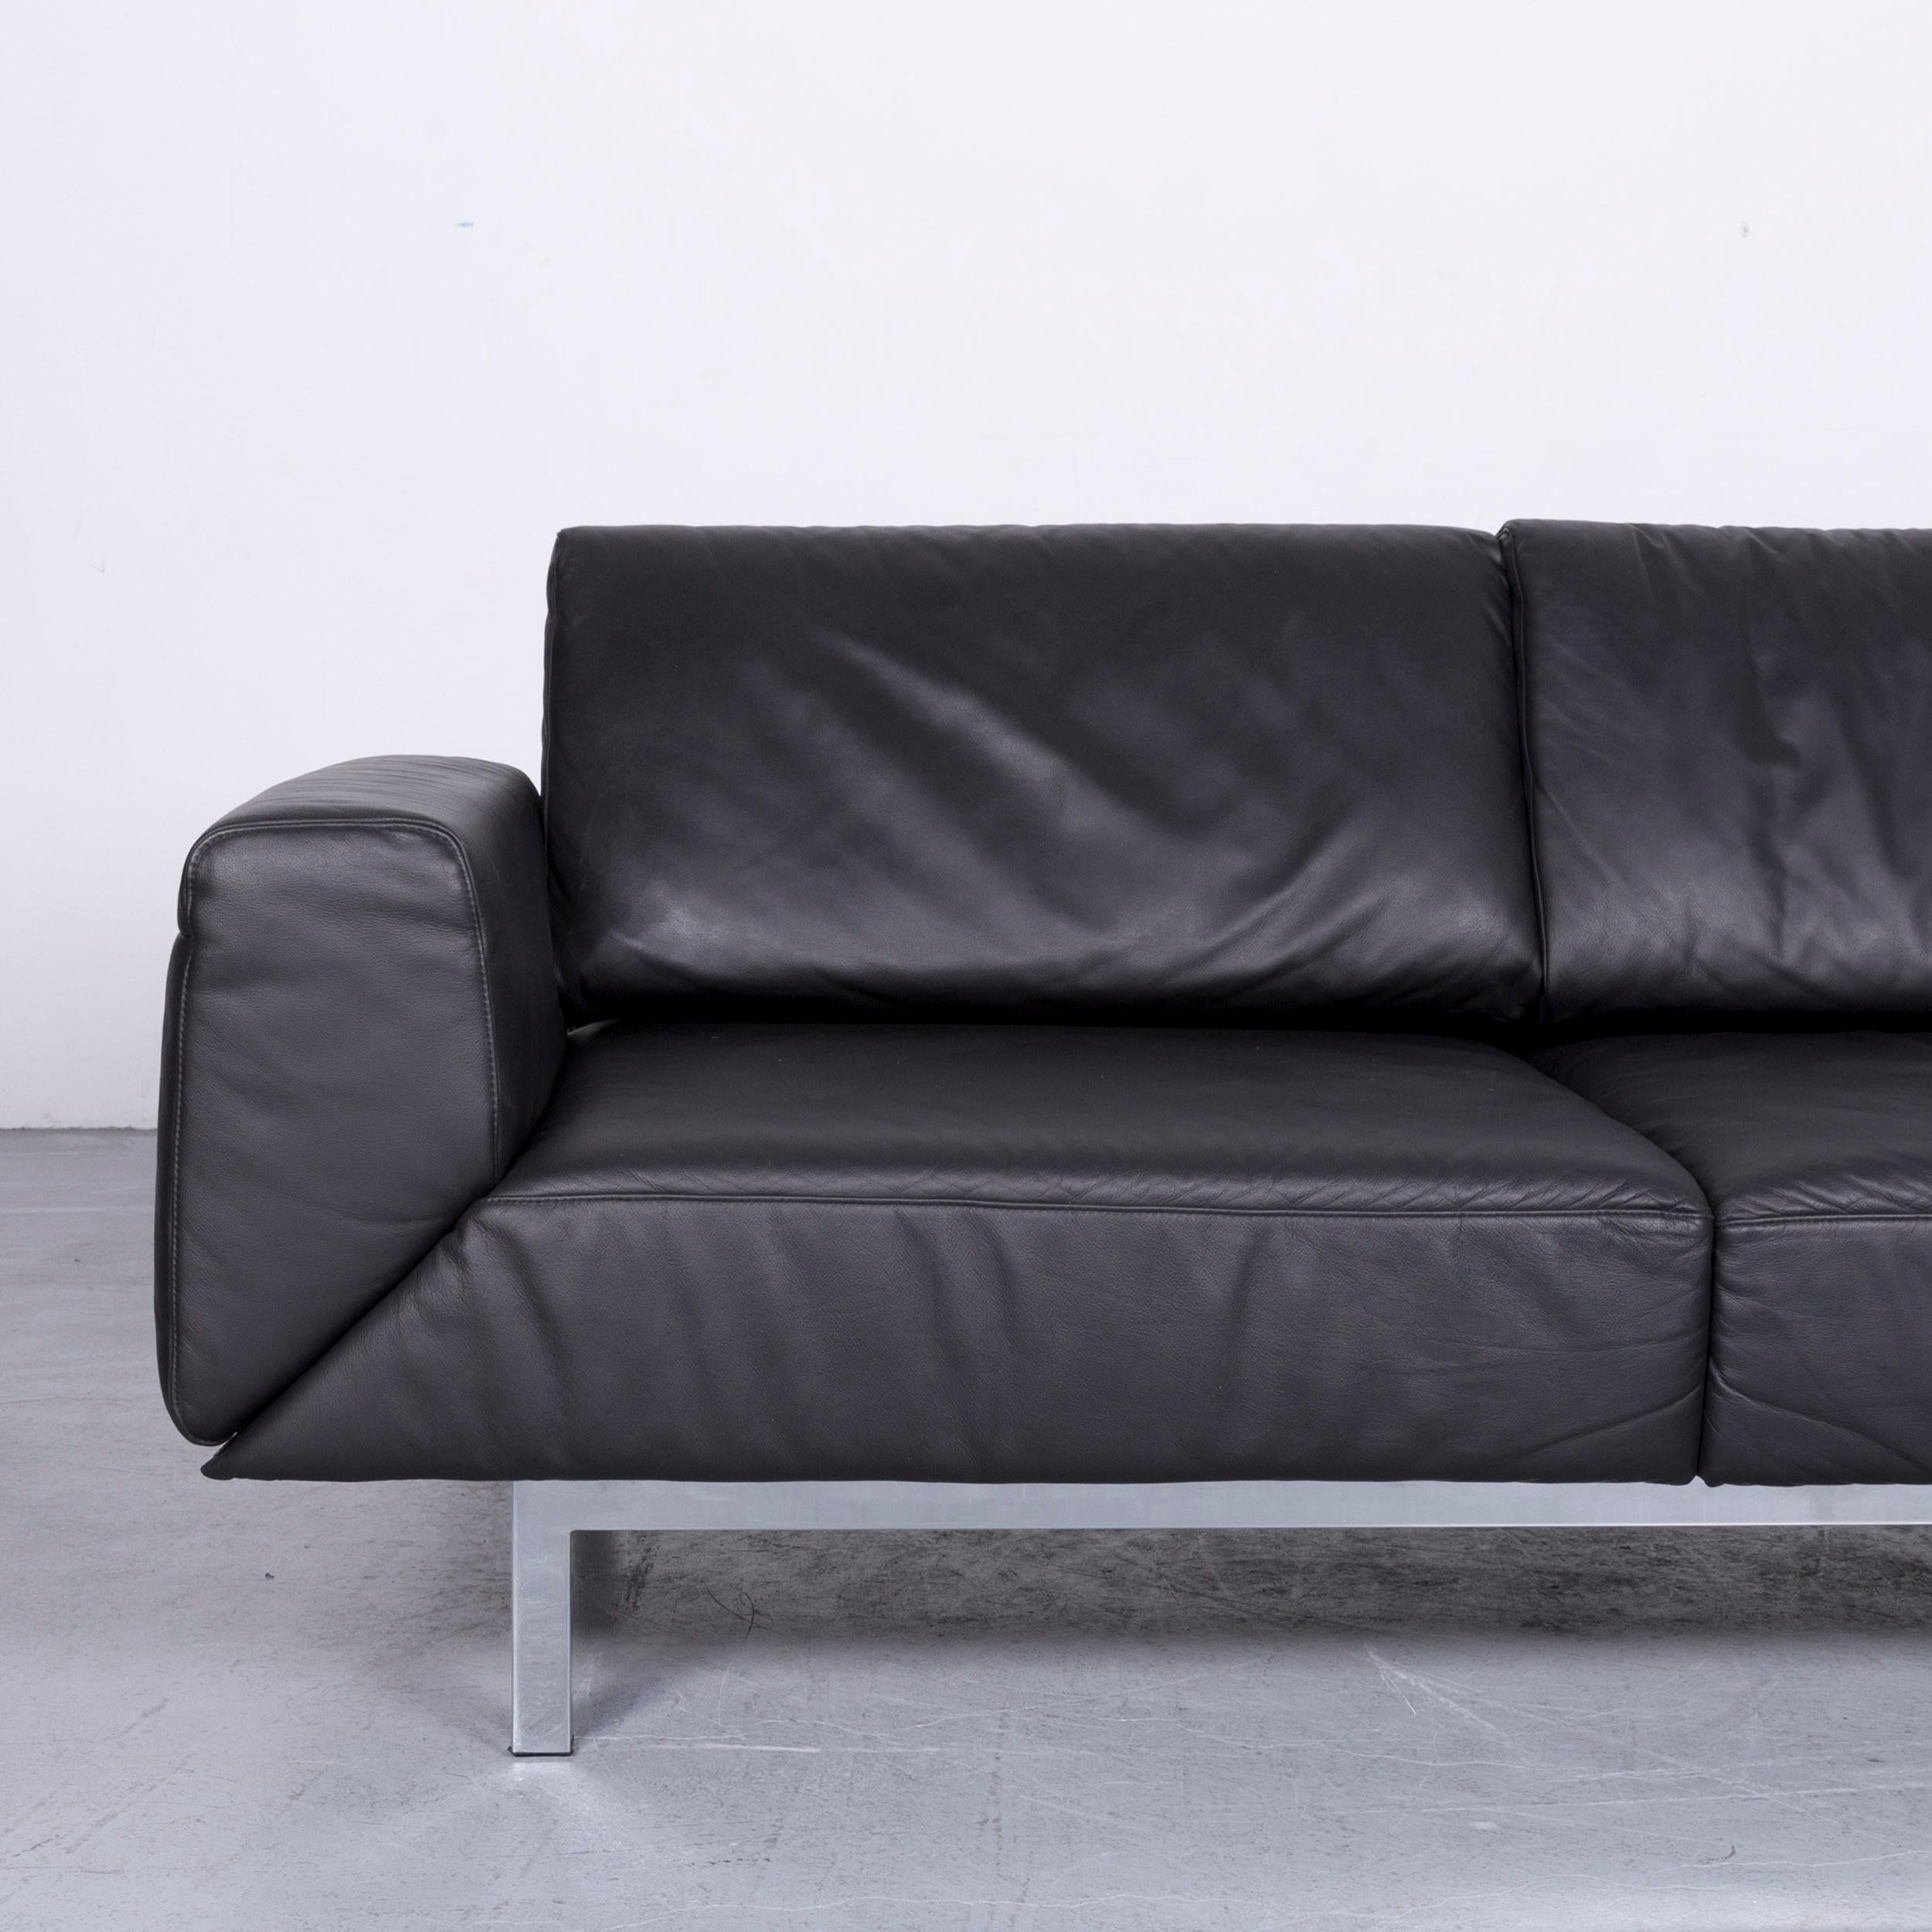 Mondo Relaxa Designer Three-Seat Sofa Leather Black Function Couch 1